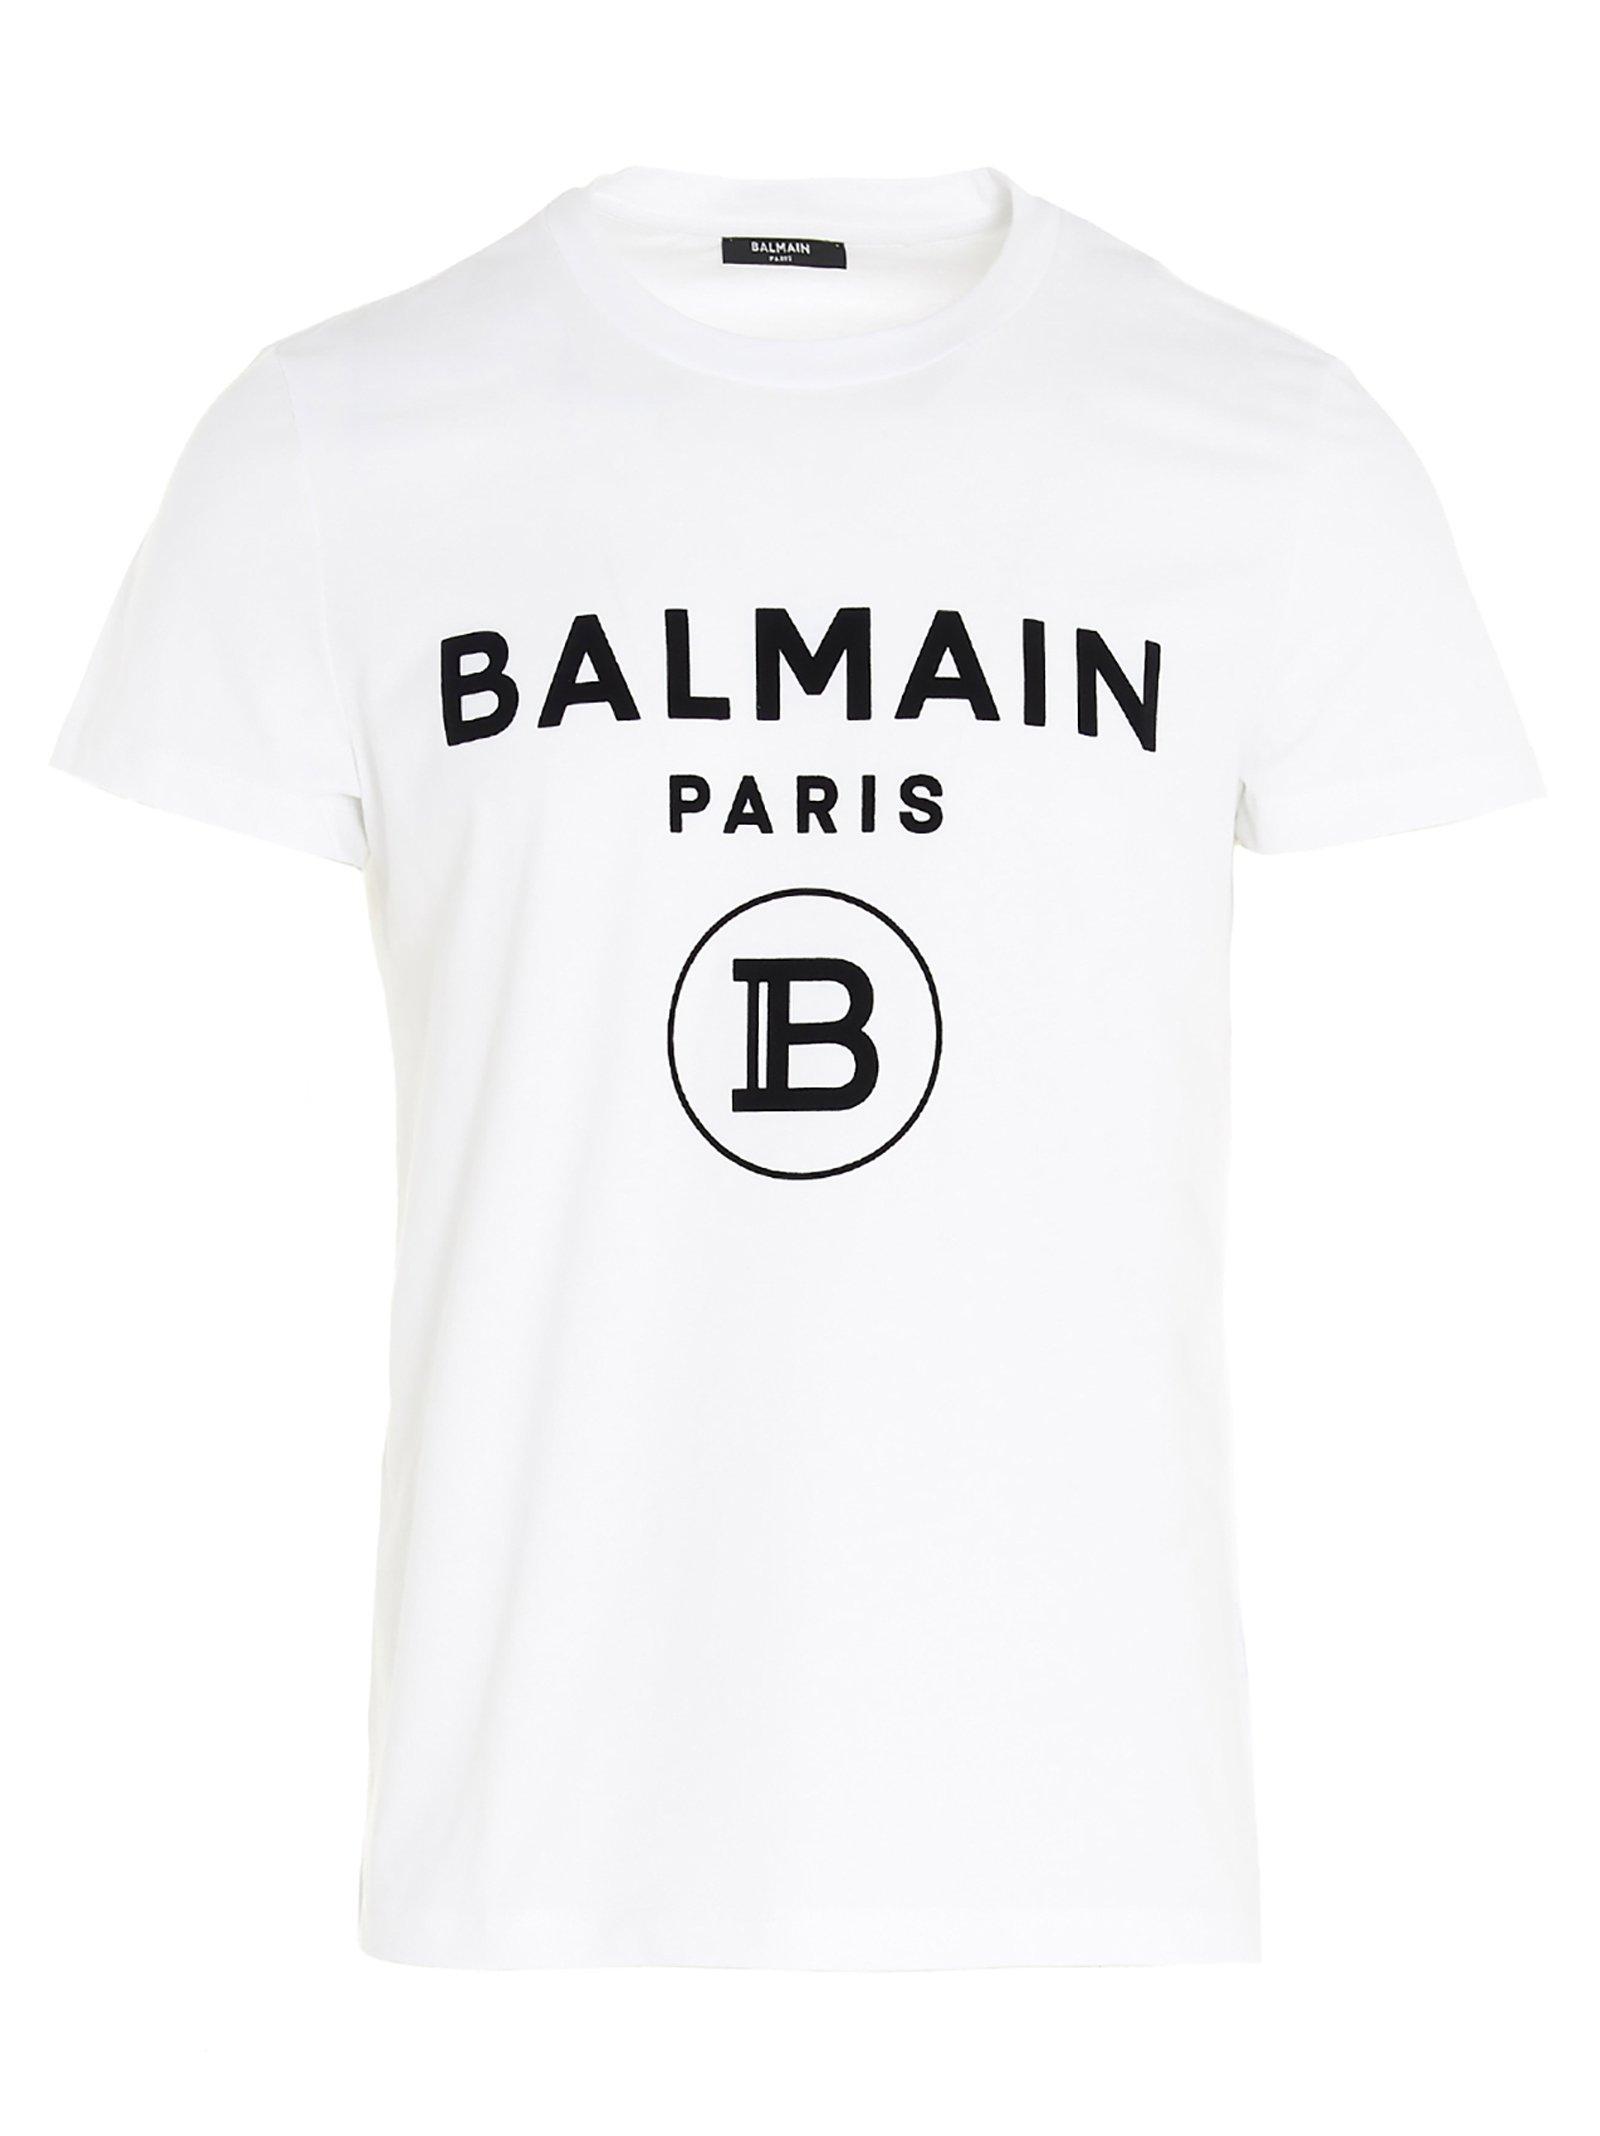 Balmain Cotton Logo T-shirt in White for Men - Lyst